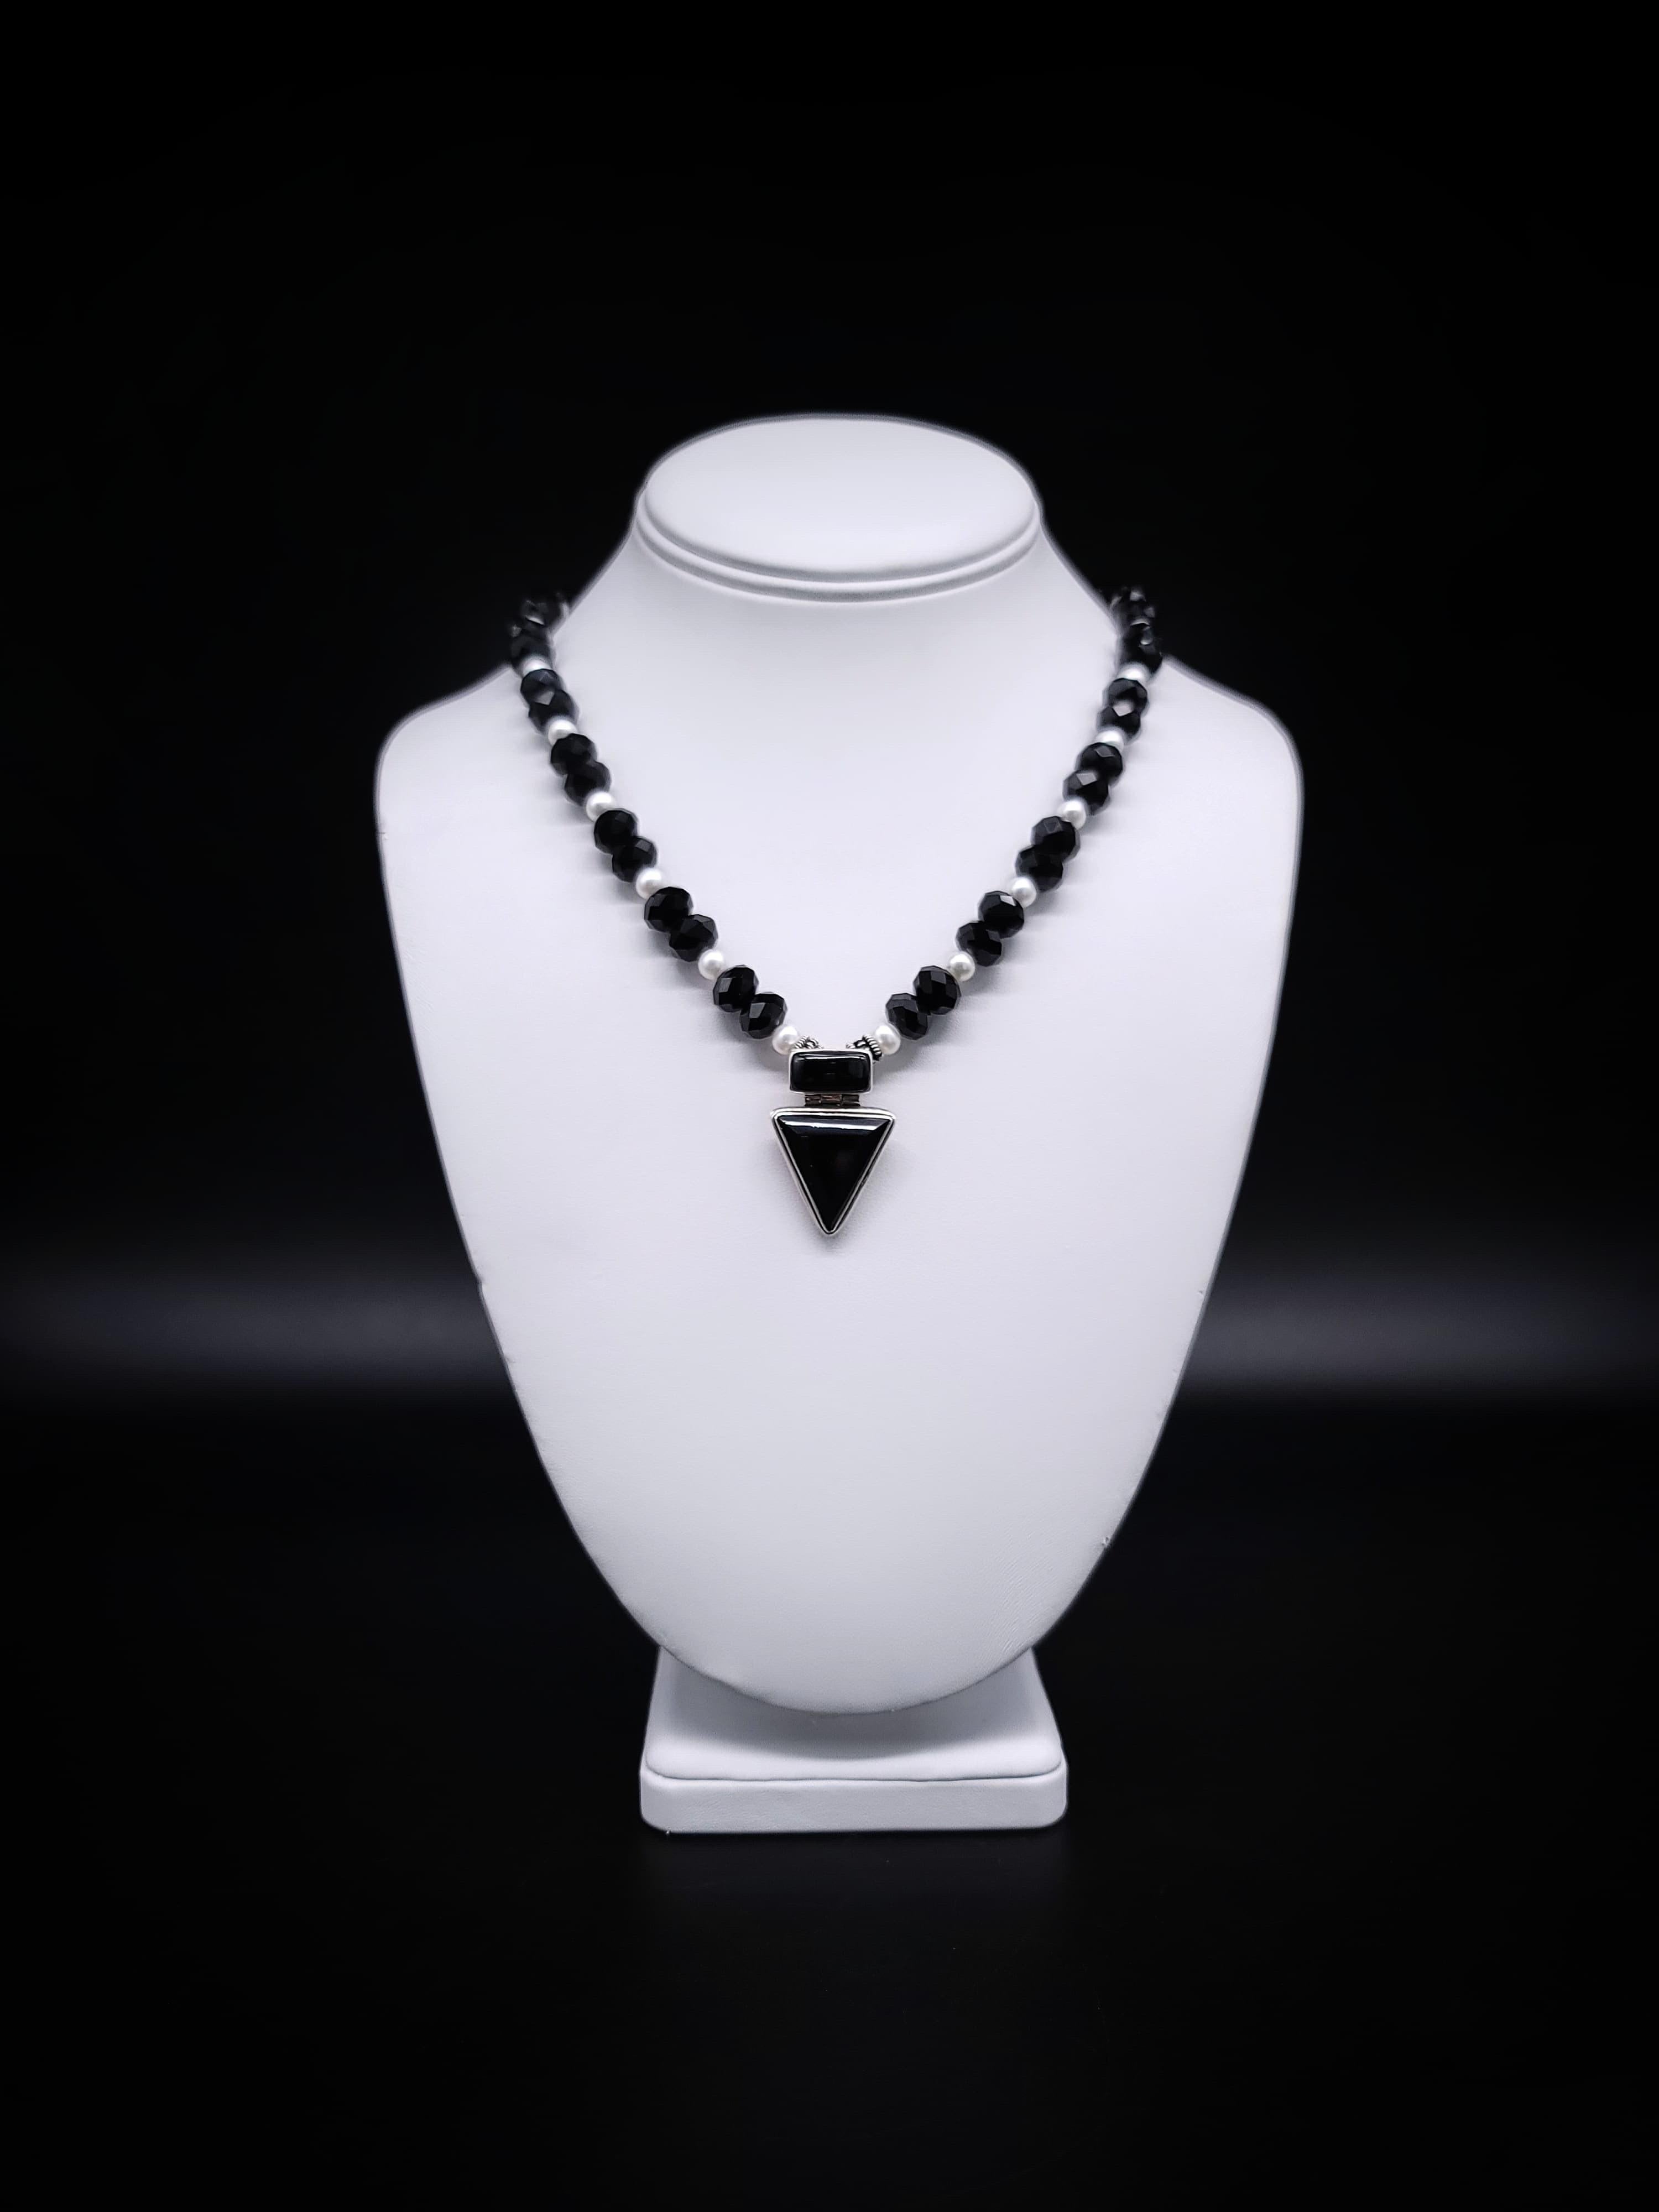 A.Jeschel Versatile and elegant Onyx pendant necklace. 13